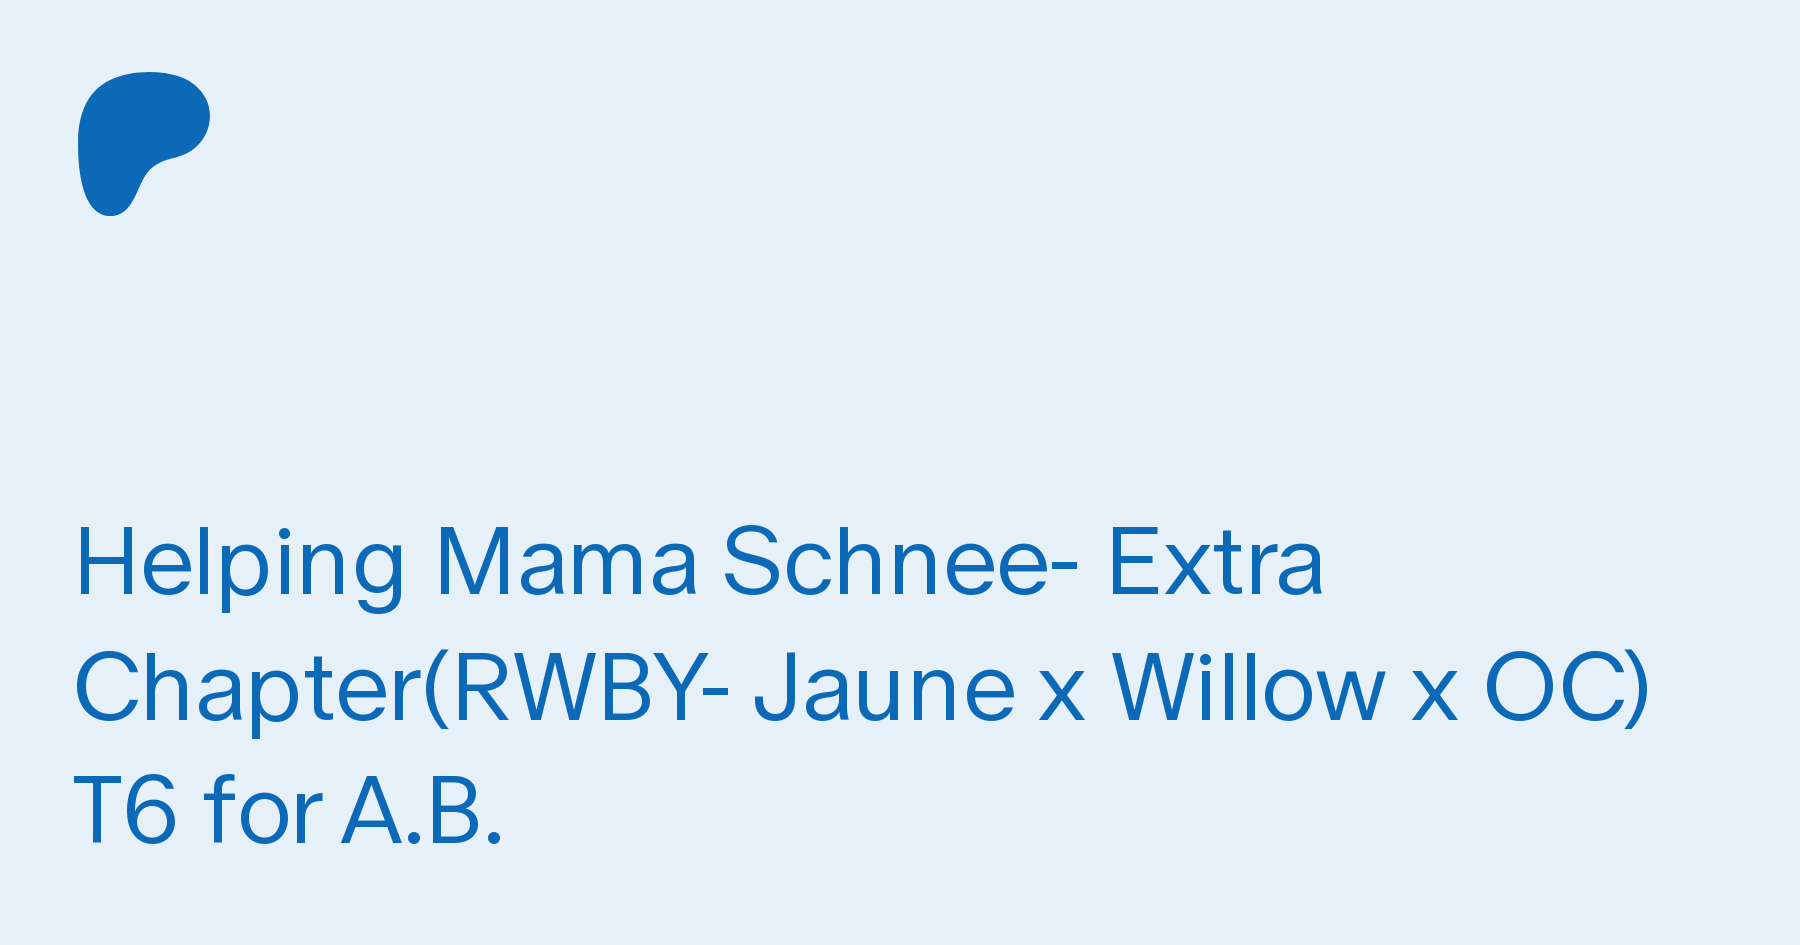 Helping Mama Schnee- Extra Chapter(RWBY- Jaune x Willow x OC) T6